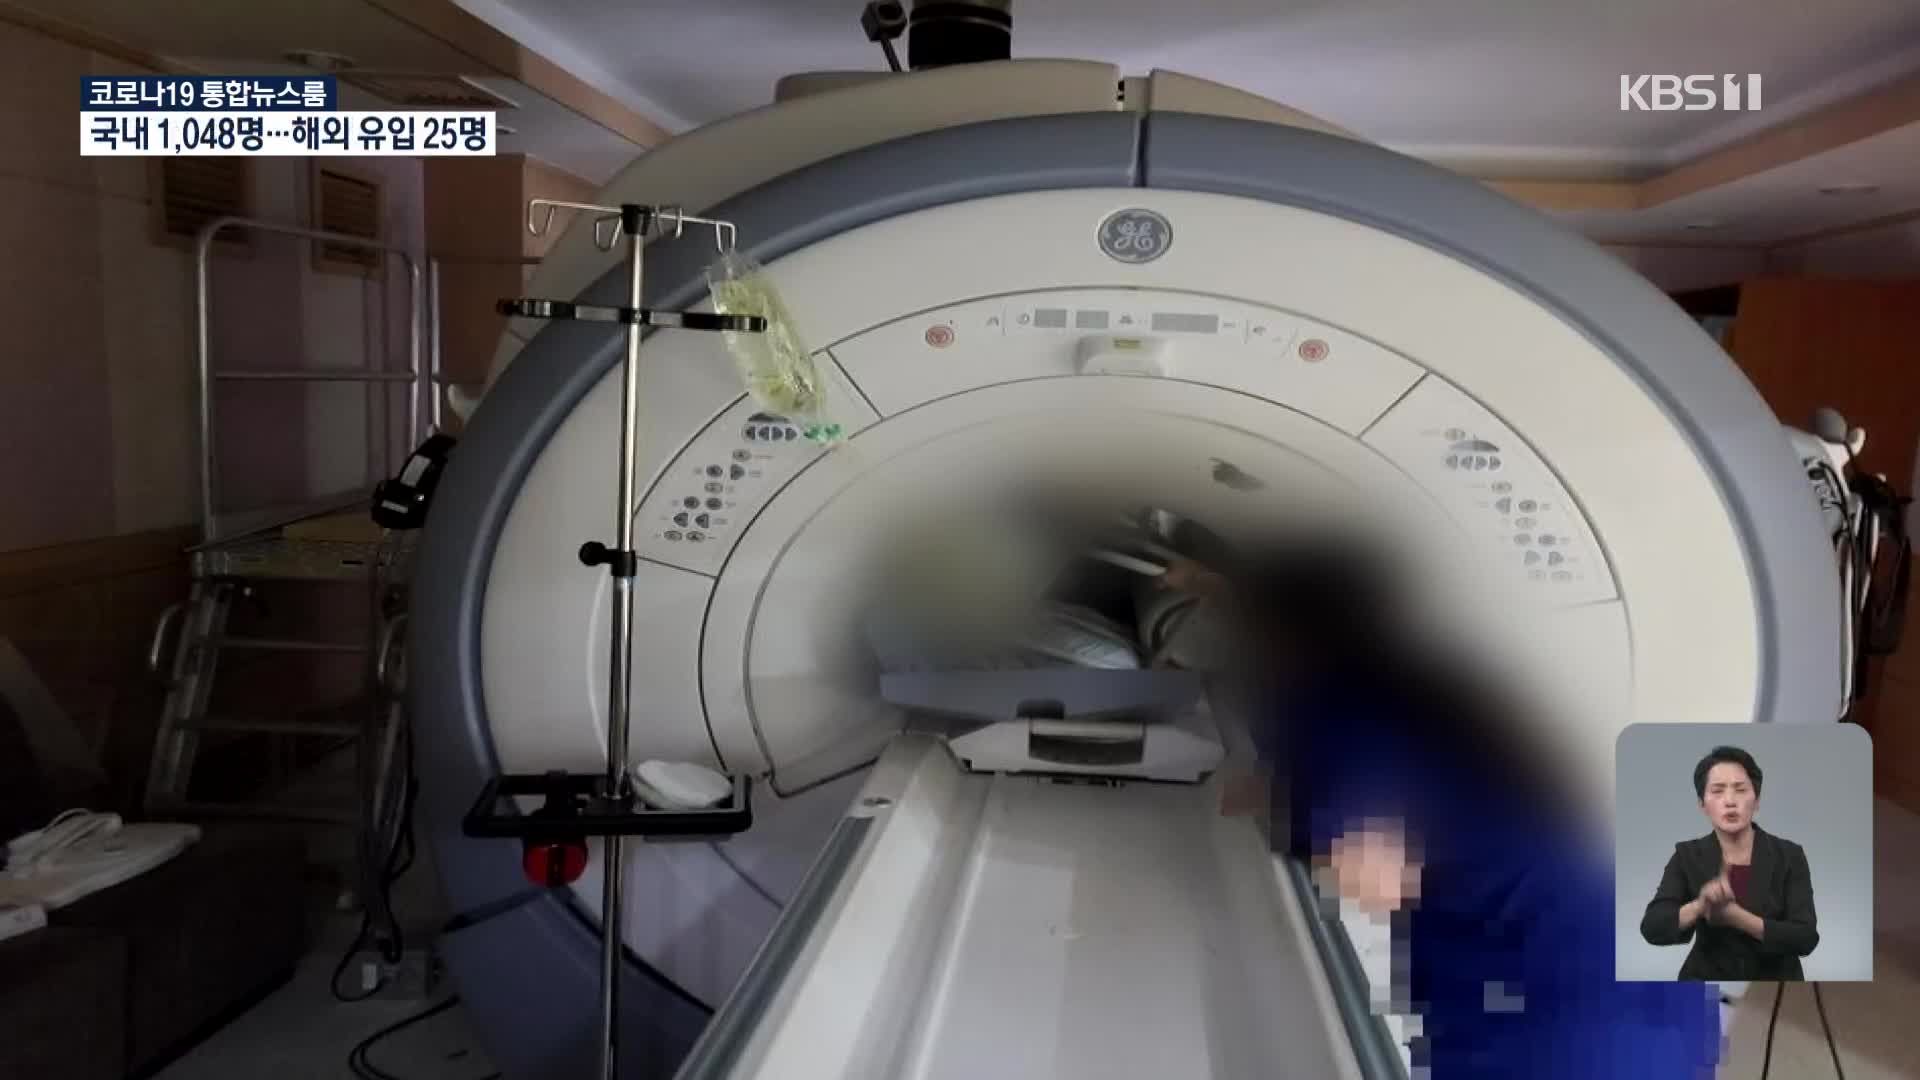 ‘MRI 옆에 금속 산소통이 왜’ 조사…의료법에도 관련 조항 없어